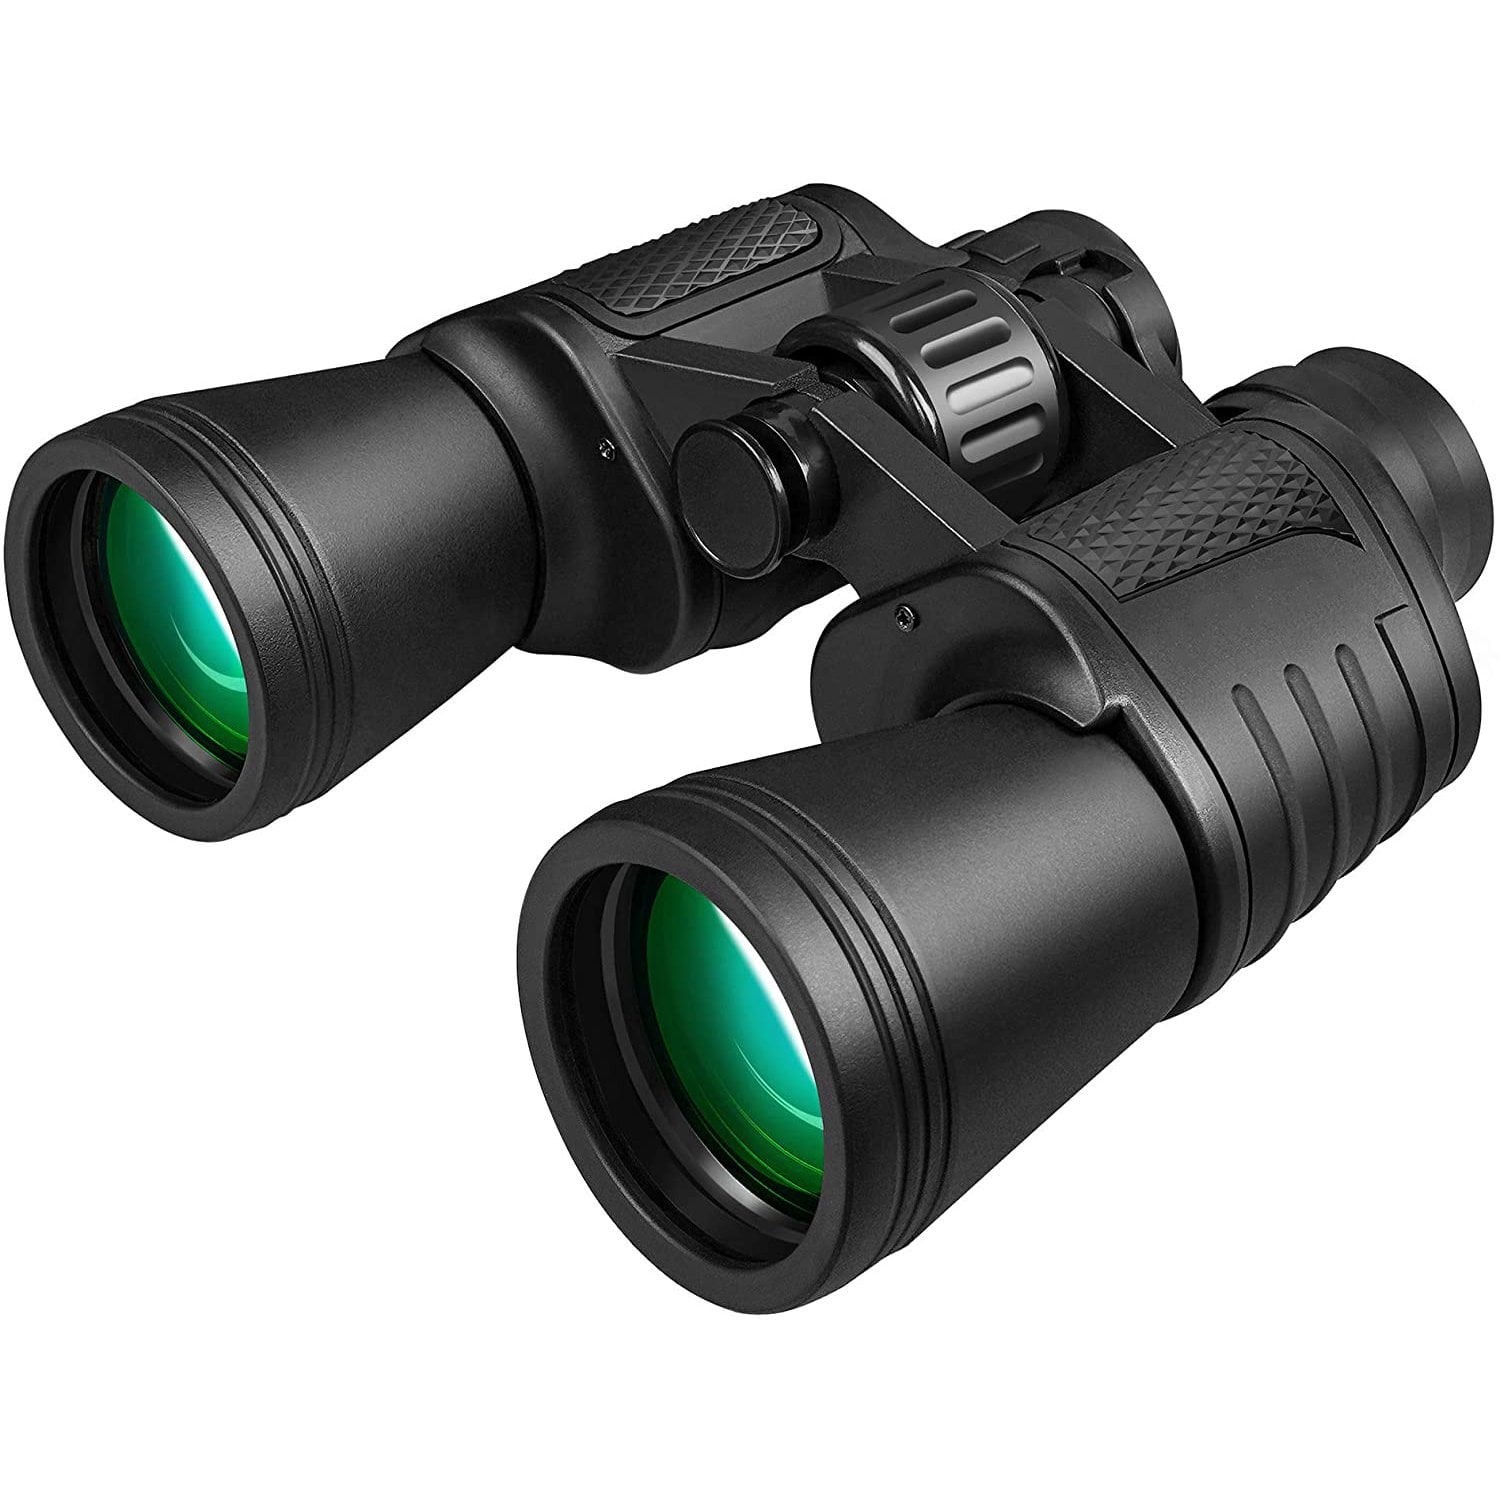 10-180x100 Zoom 50mm BAK4 Binoculars Day/Night Vision Telescope Waterproof+Bag 